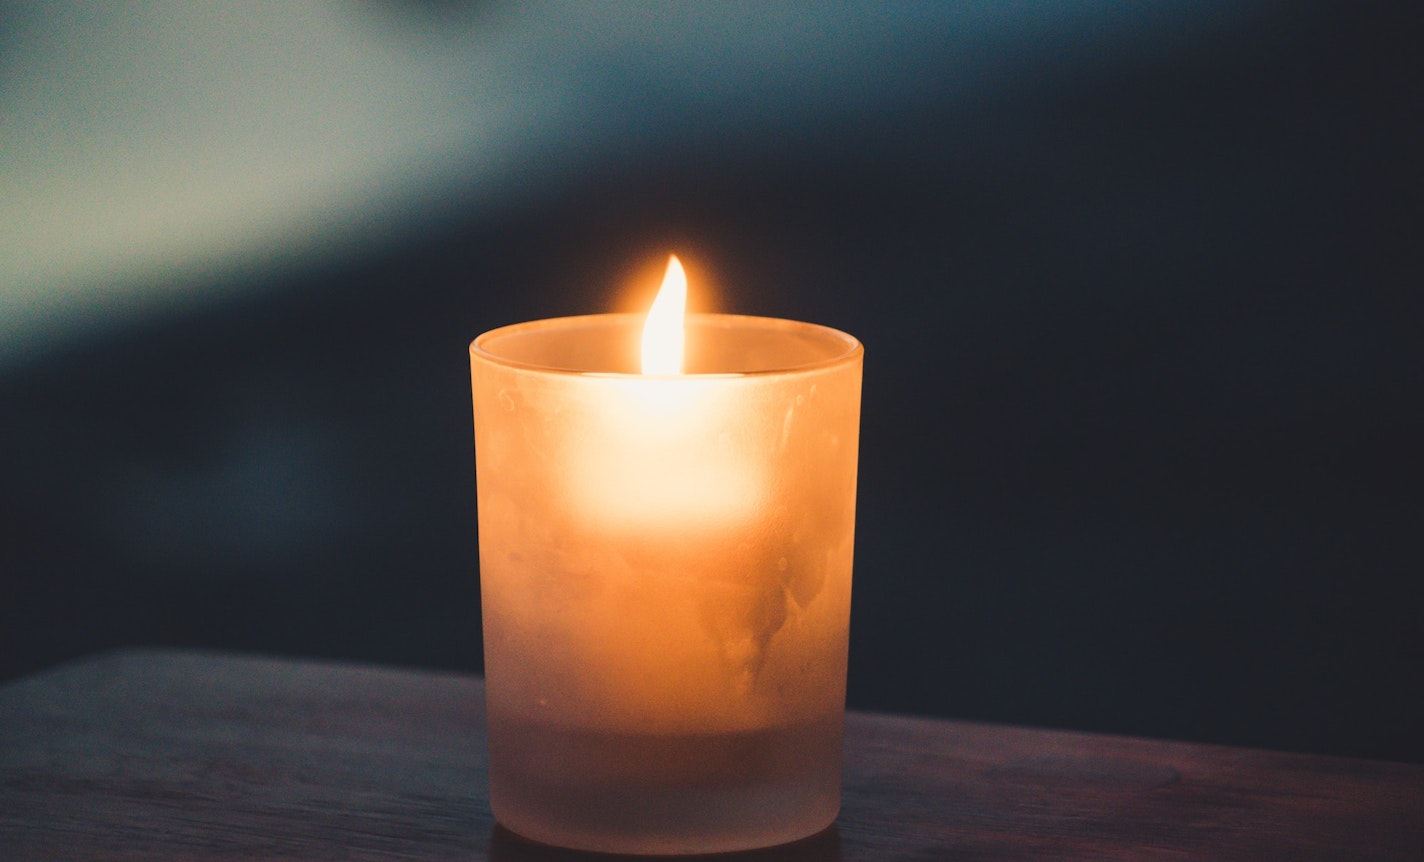 Together on the 9th: A Candlelight Vigil with Neil Gaiman & Rabbi Sydney Mintz